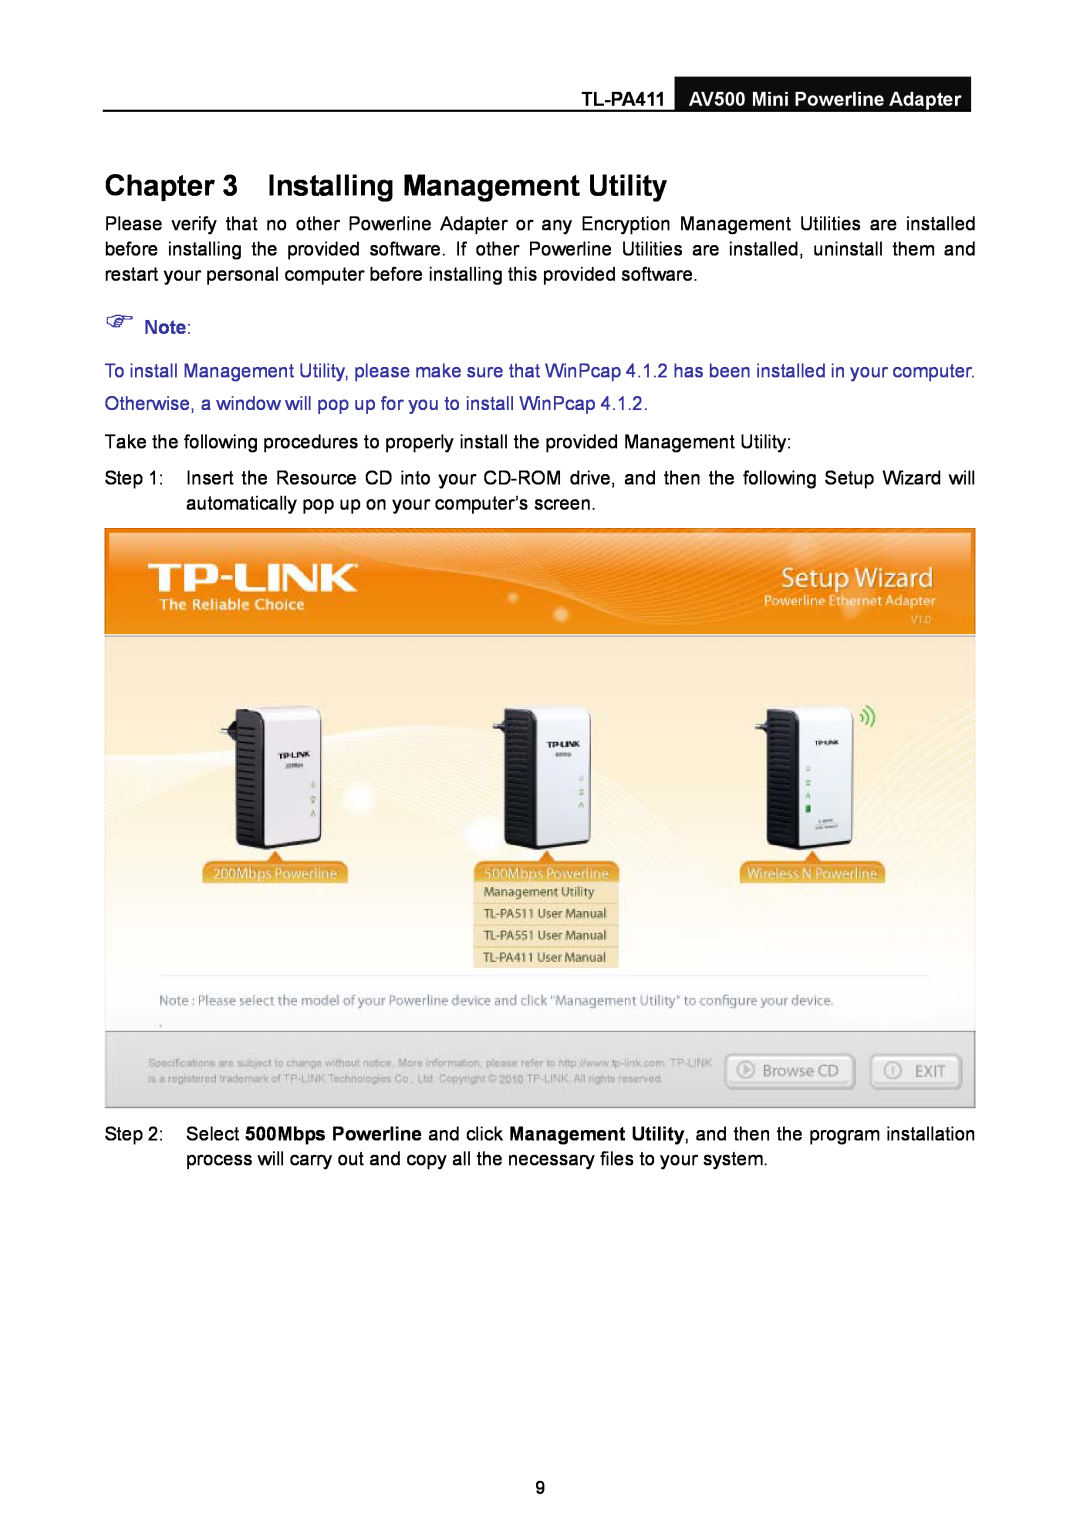 TP-Link manual Installing Management Utility, TL-PA411 AV500 Mini Powerline Adapter 